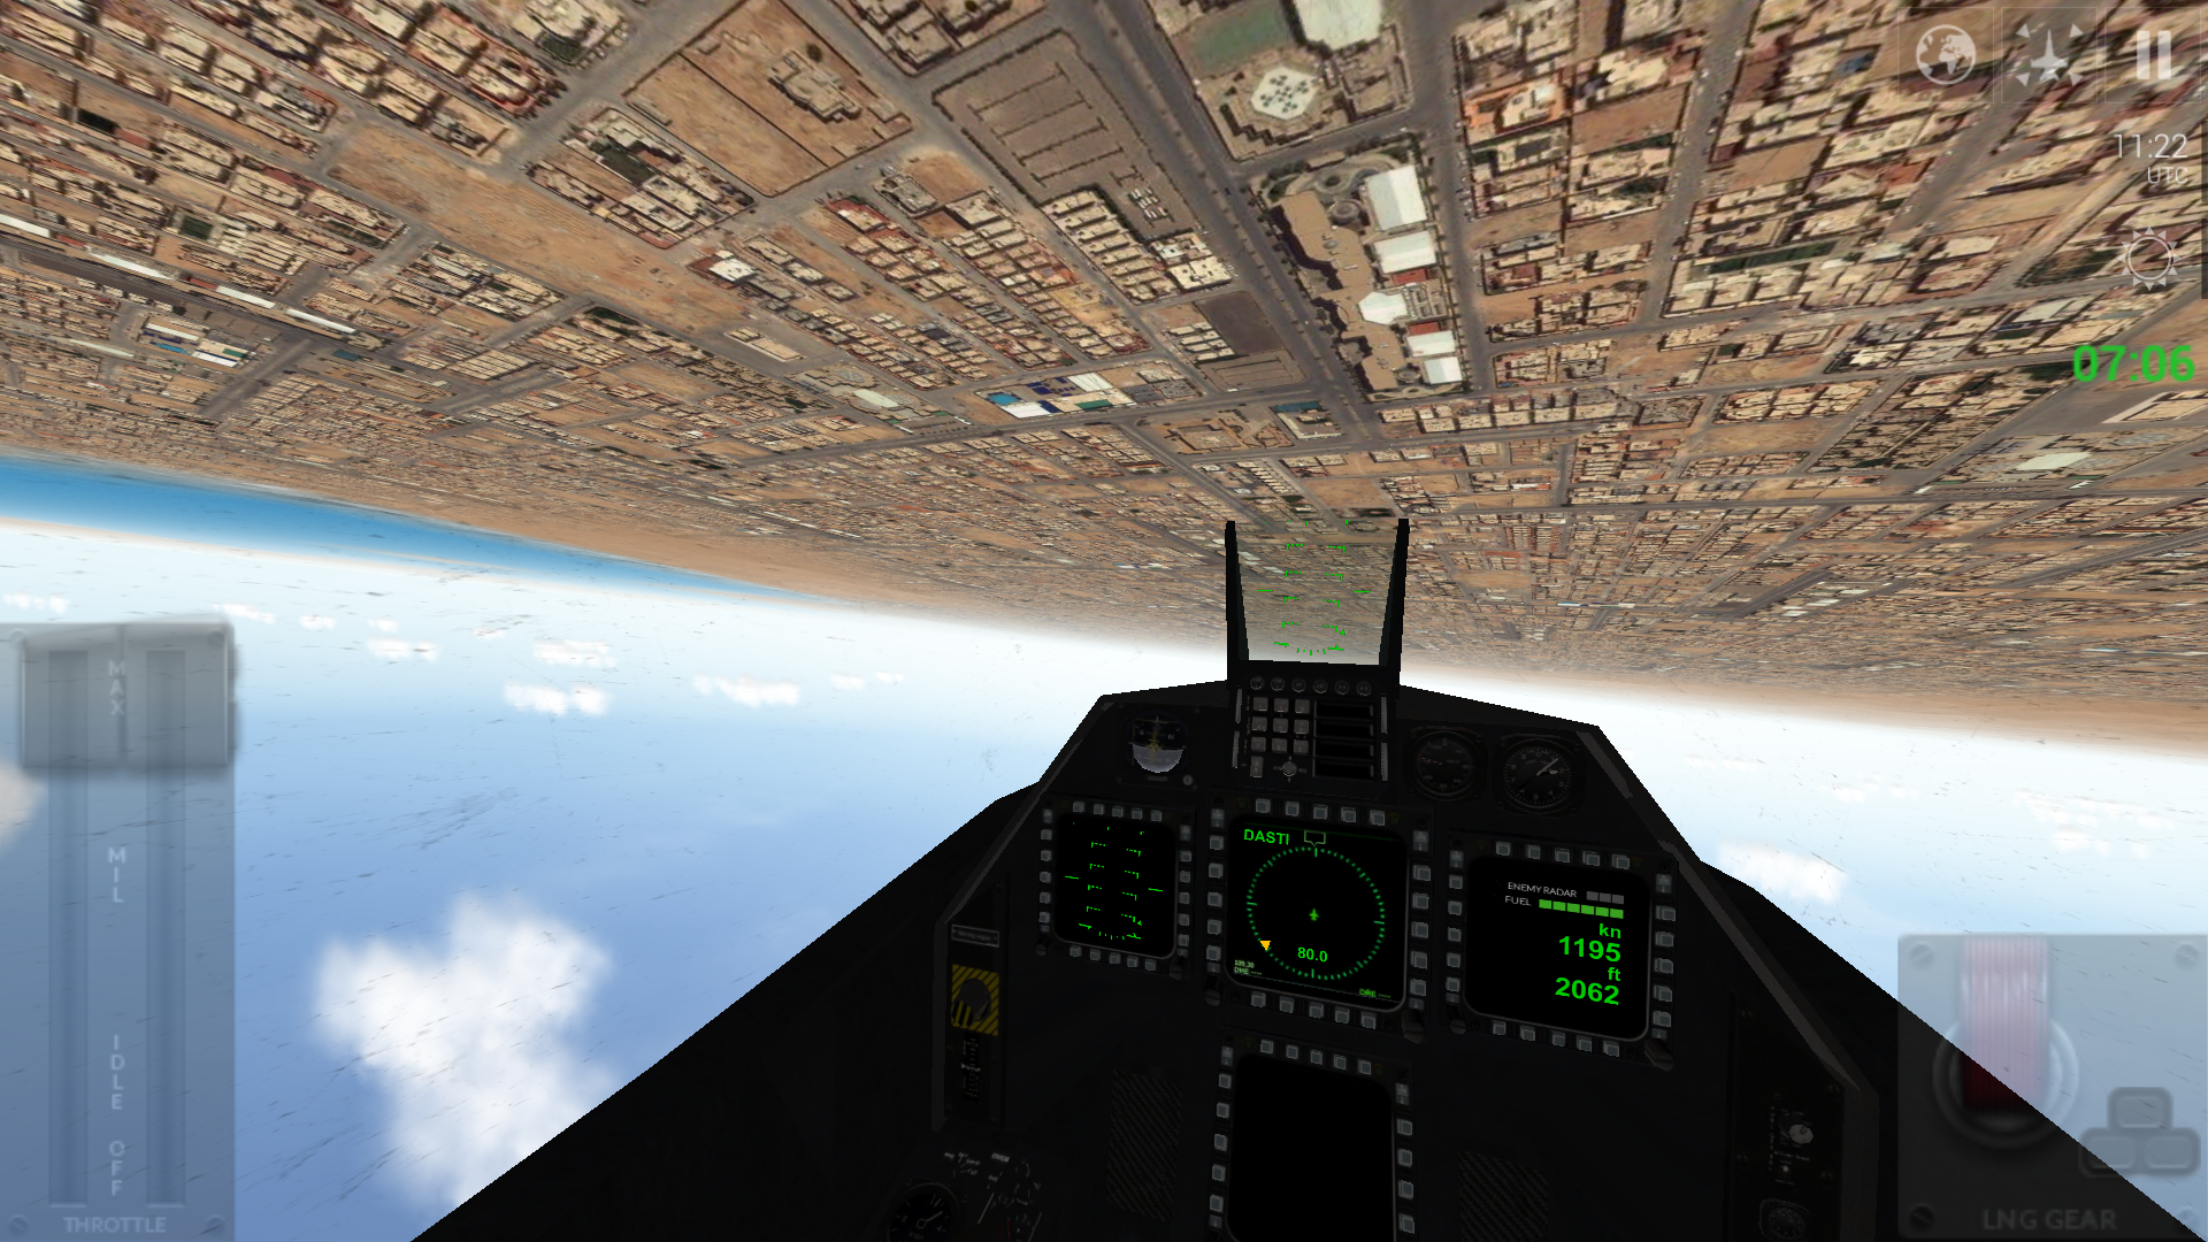  Uçak simülasyon oyunu